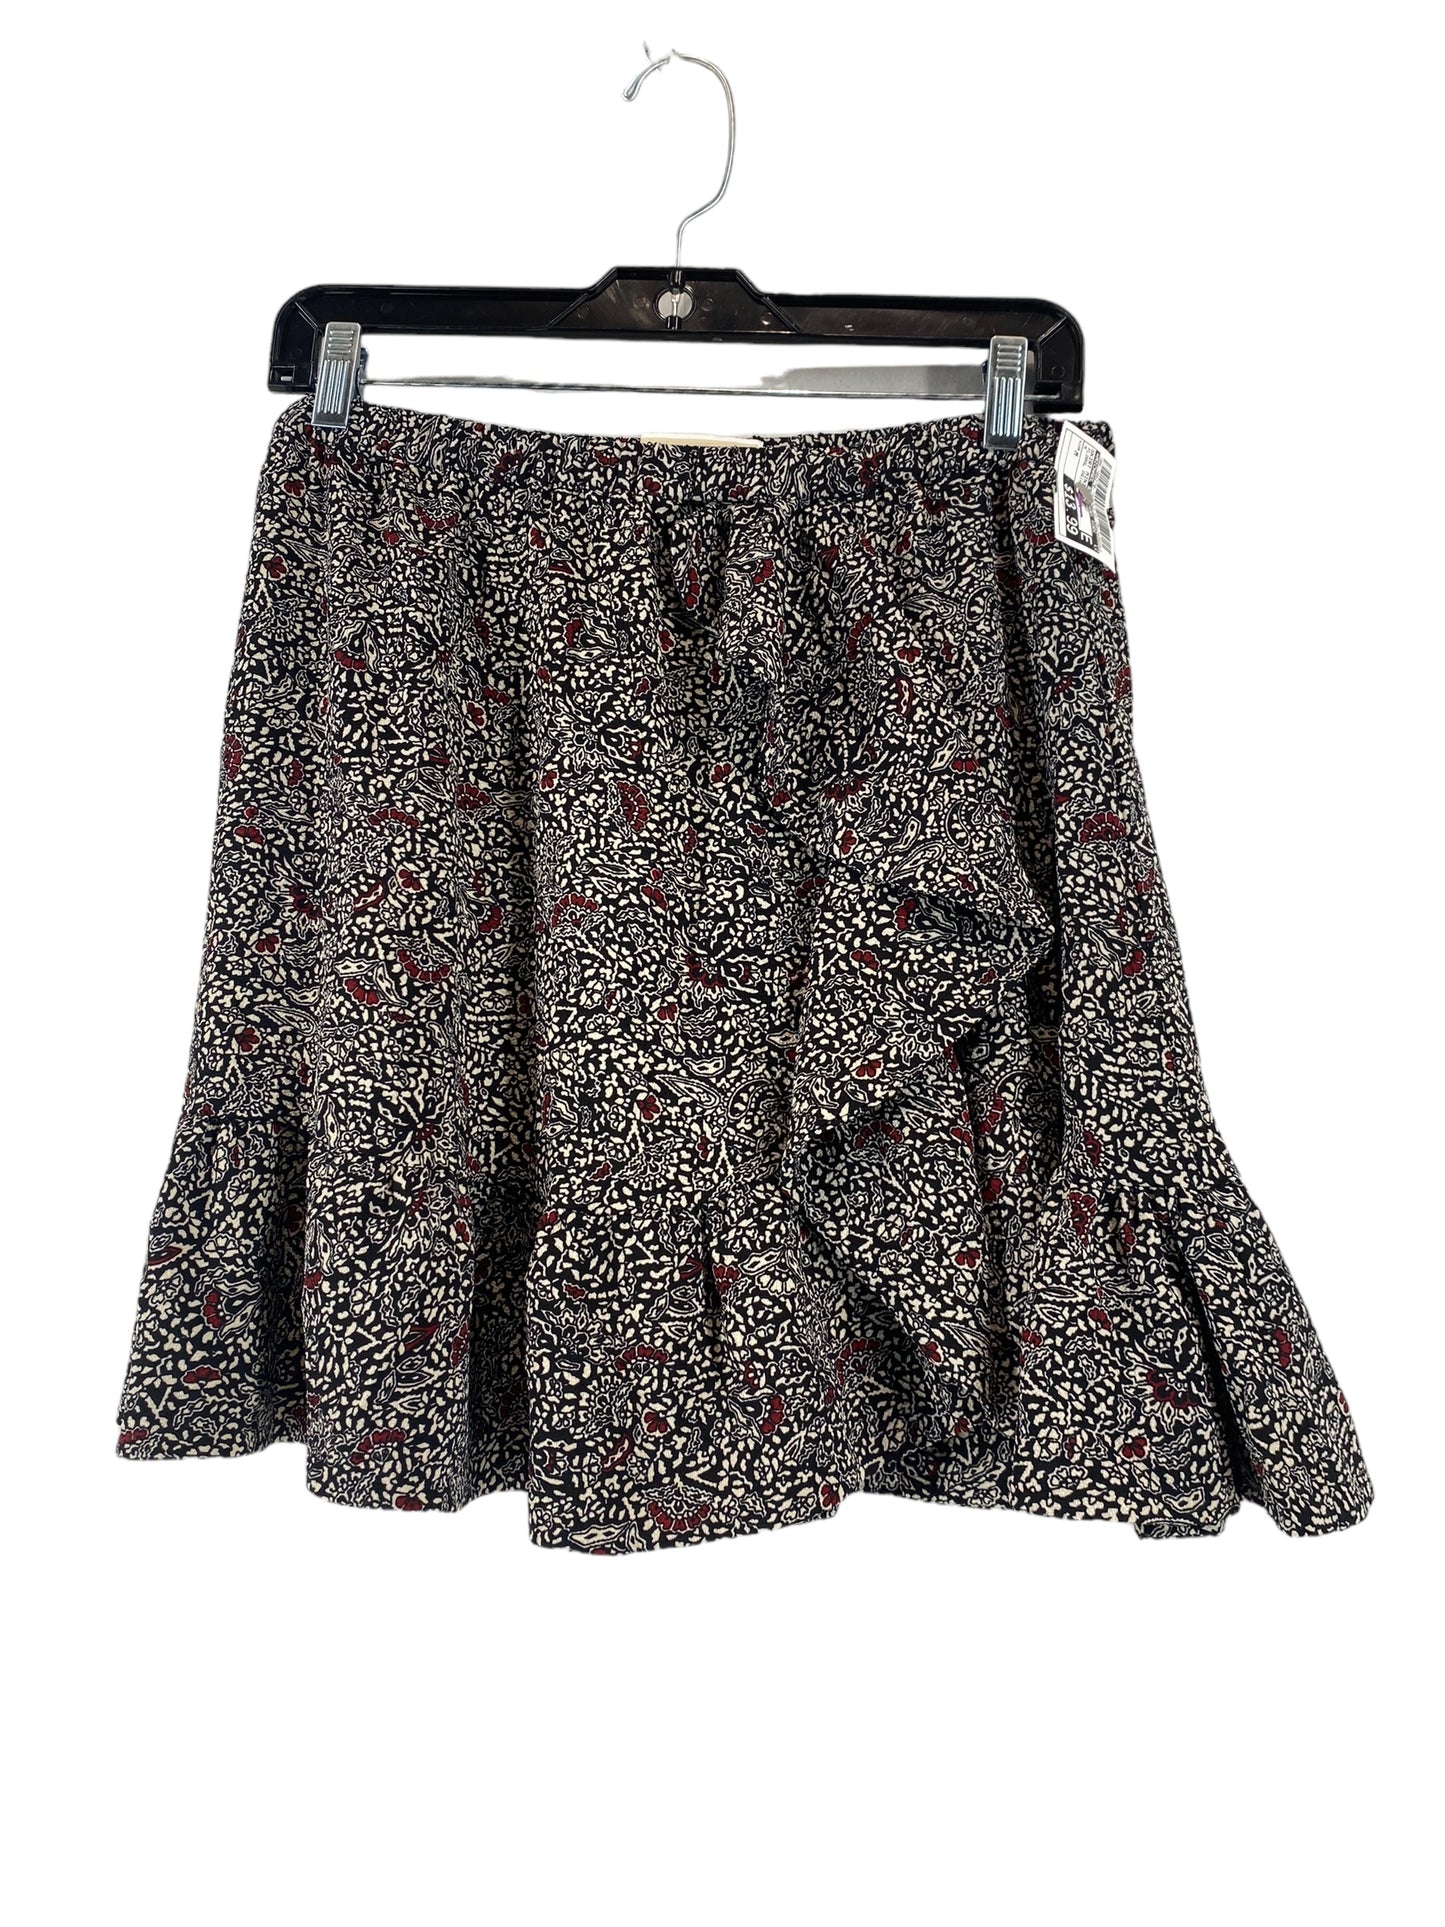 Skirt Mini & Short By Michael By Michael Kors  Size: M